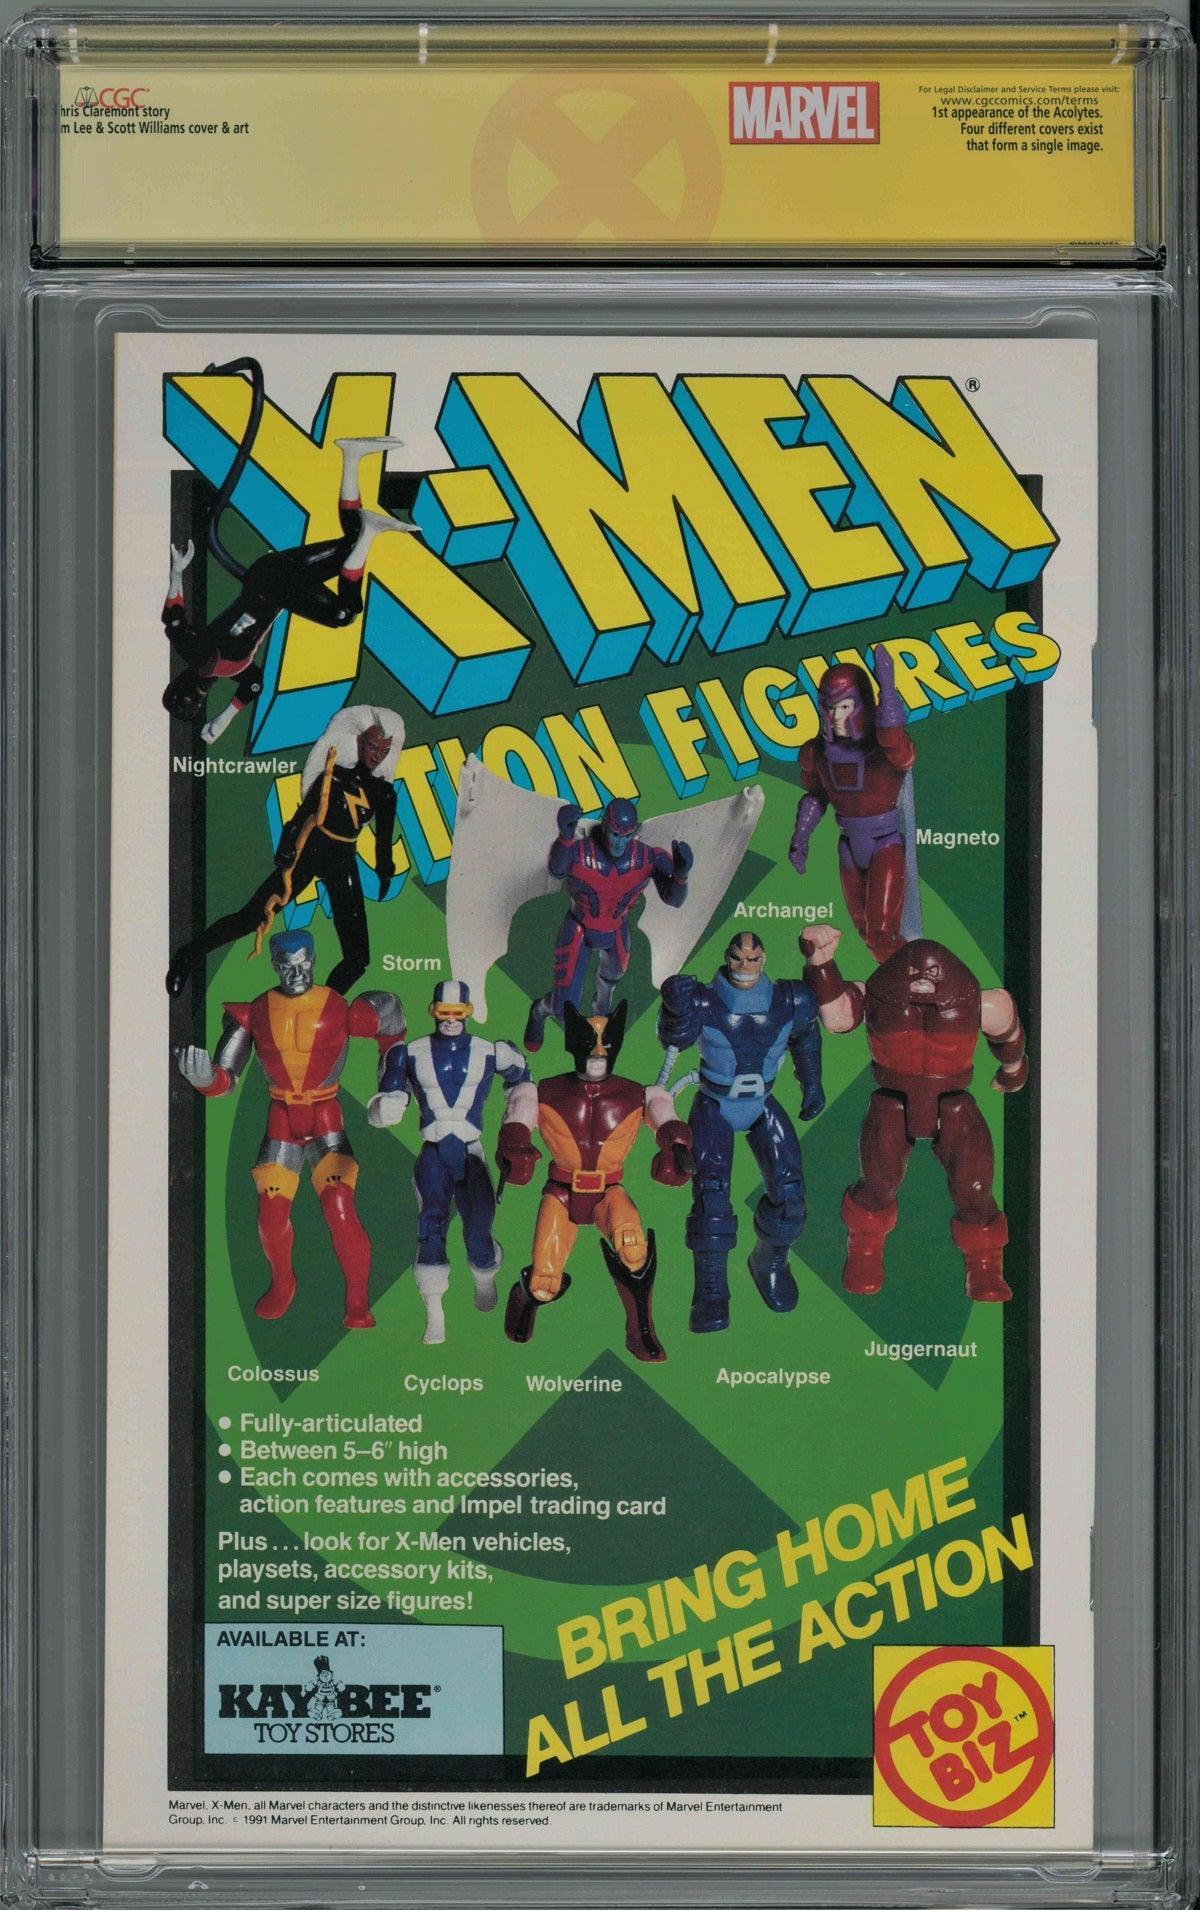 CGC X-MEN VOL 2 #1 BEAST & STORM COVER (9.8) SIGNATURE SERIES - SIGNED BY JIM LEE - Kings Comics